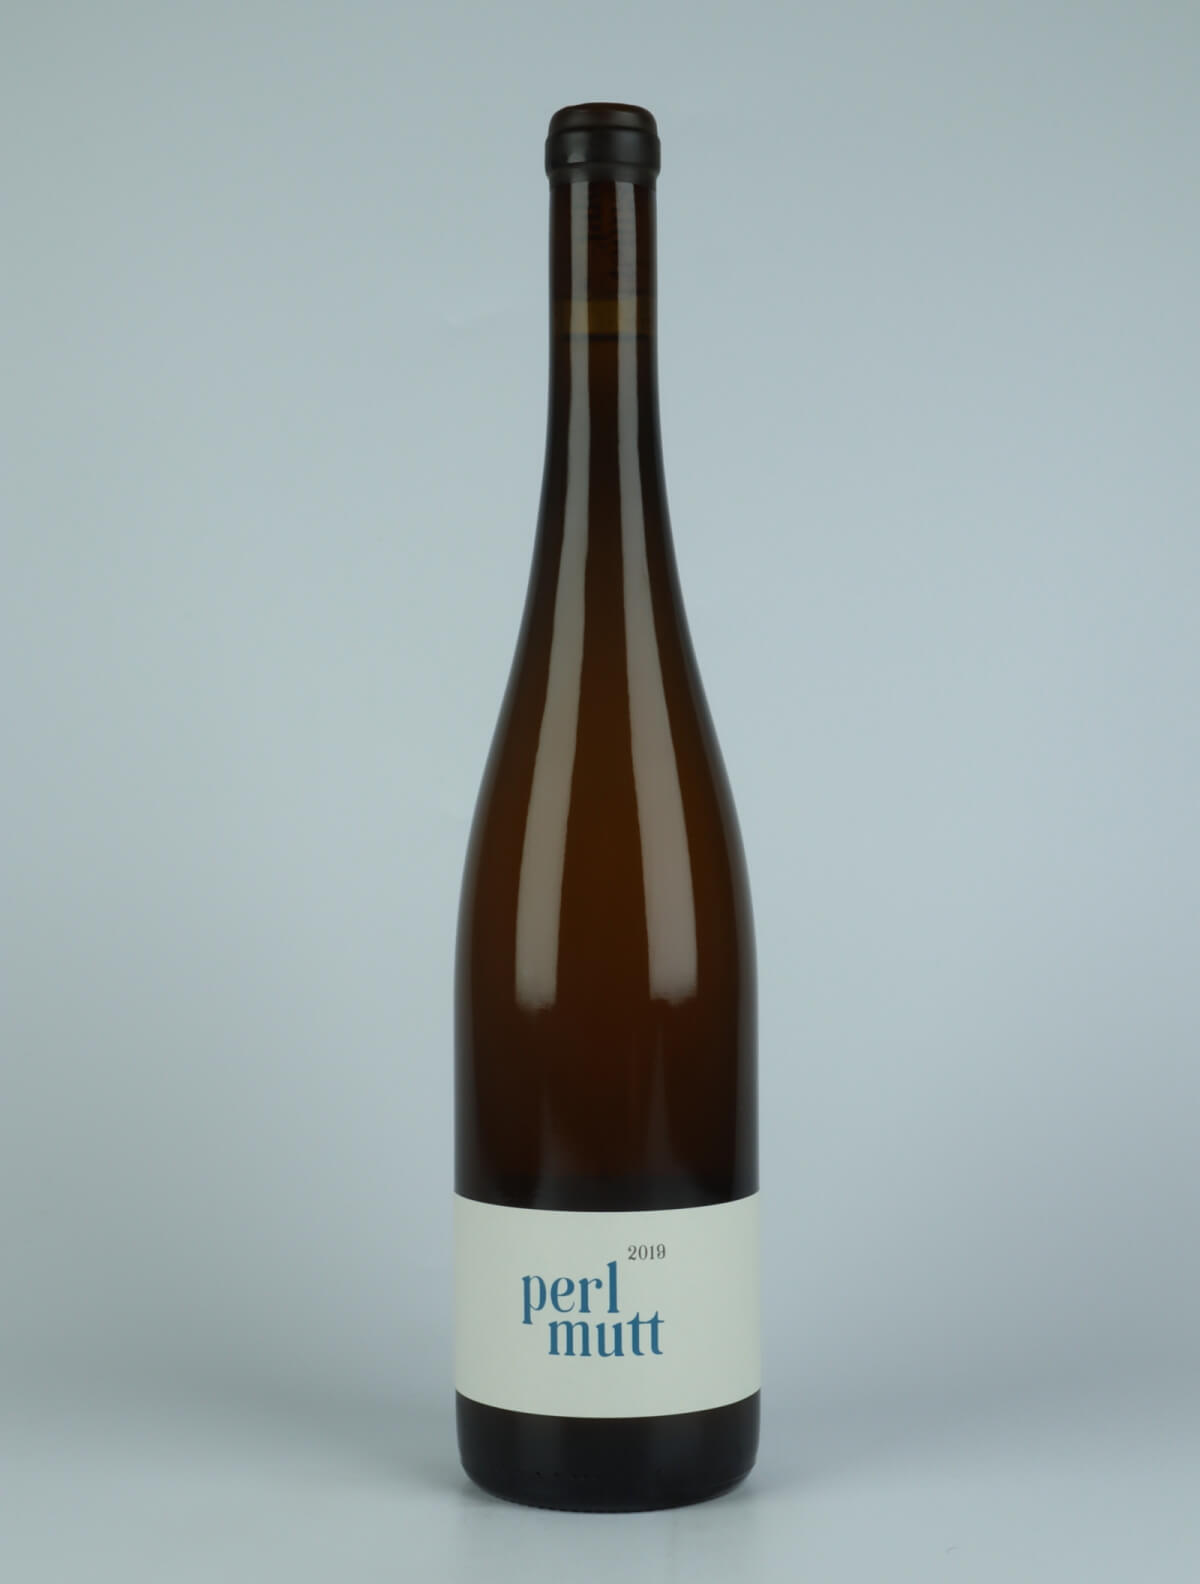 A bottle 2019 Perlmutt White wine from Jakob Tennstedt, Mosel in Germany